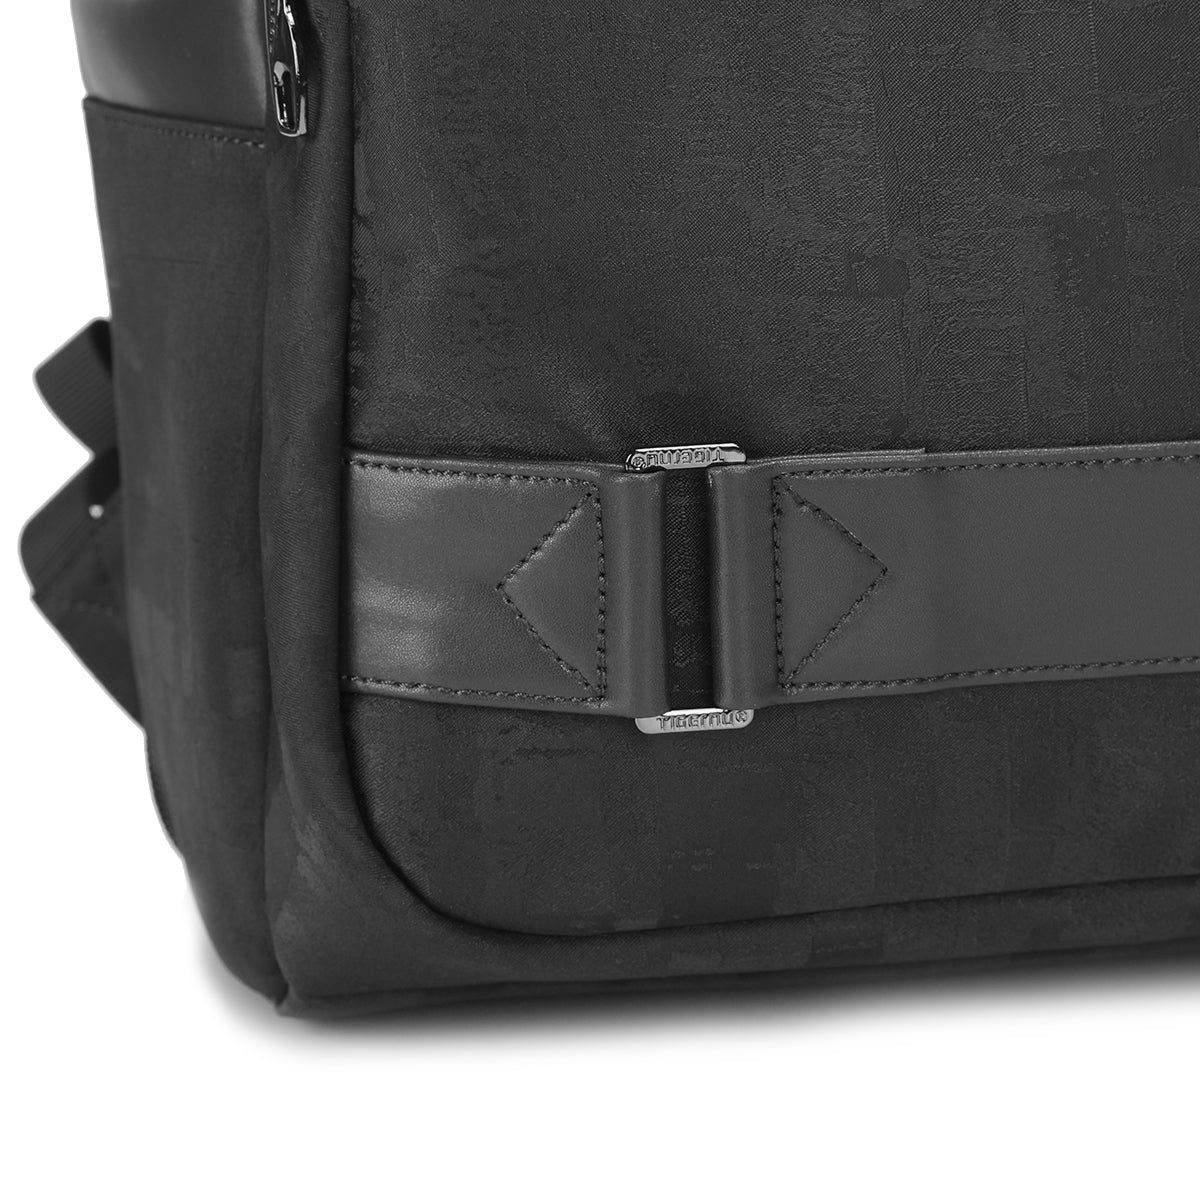 Tigernu Retro Laptop Backpack Black